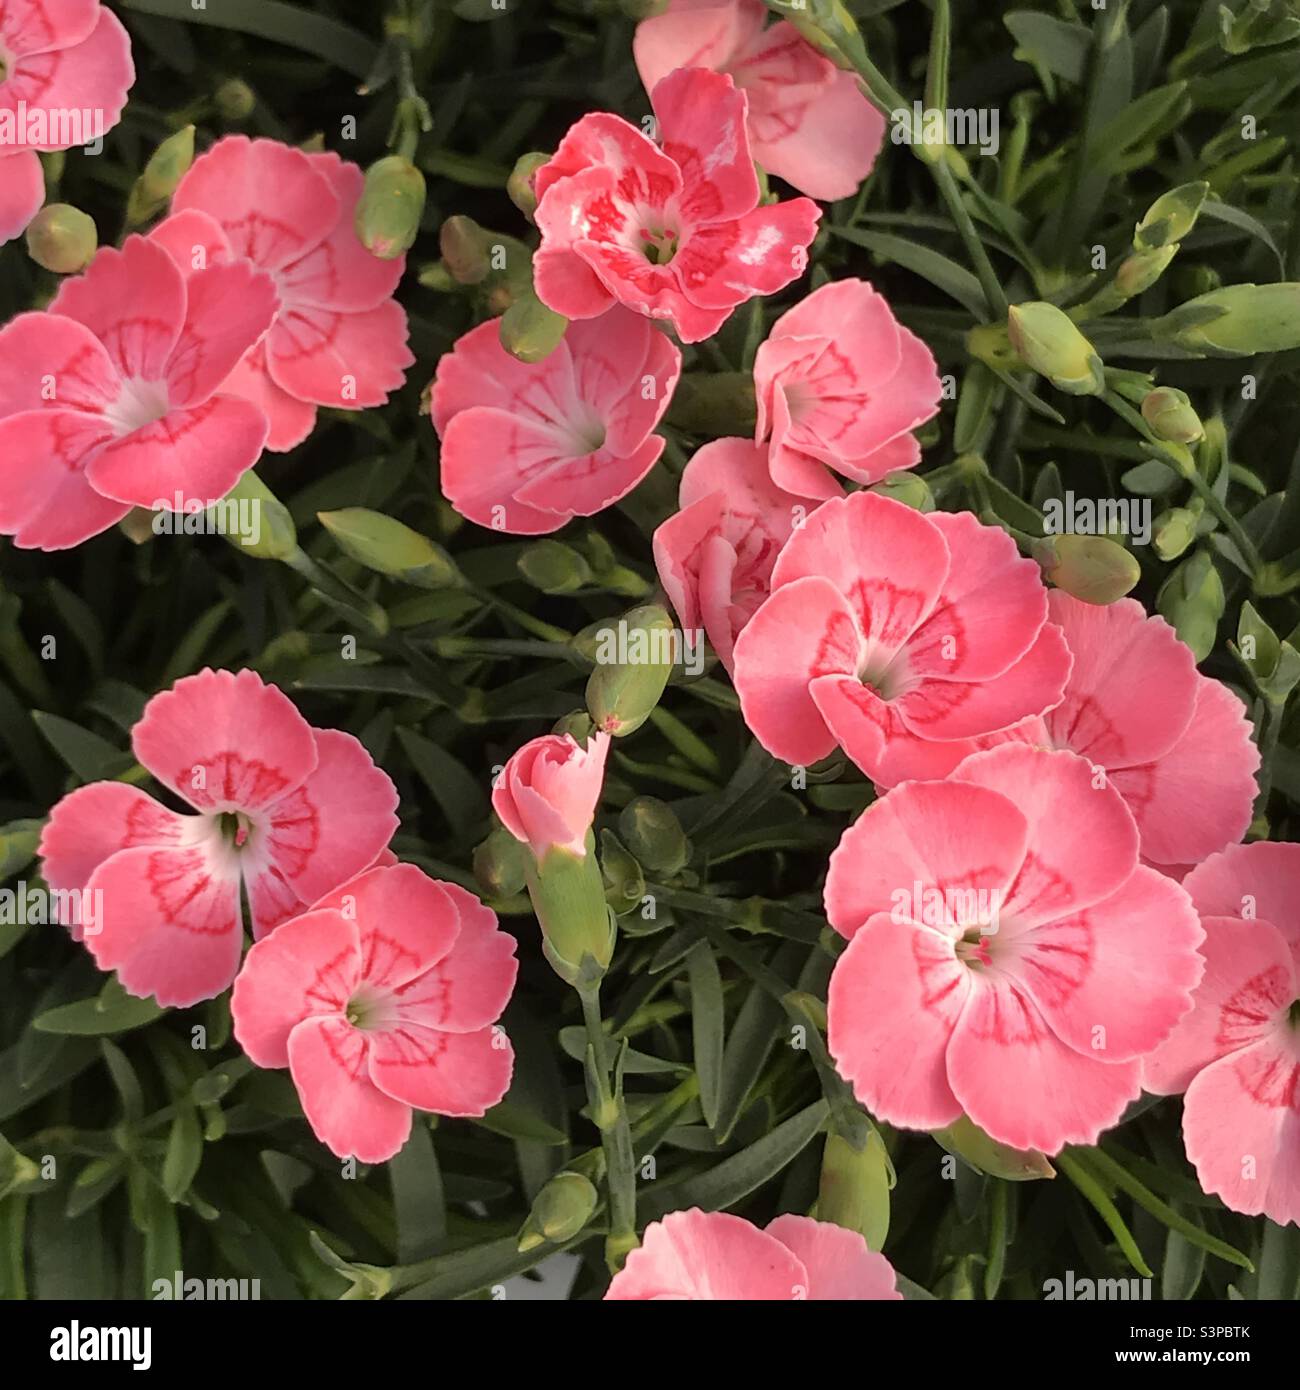 Garden geranium flowers (Pelargonium x hortorum). Stock Photo